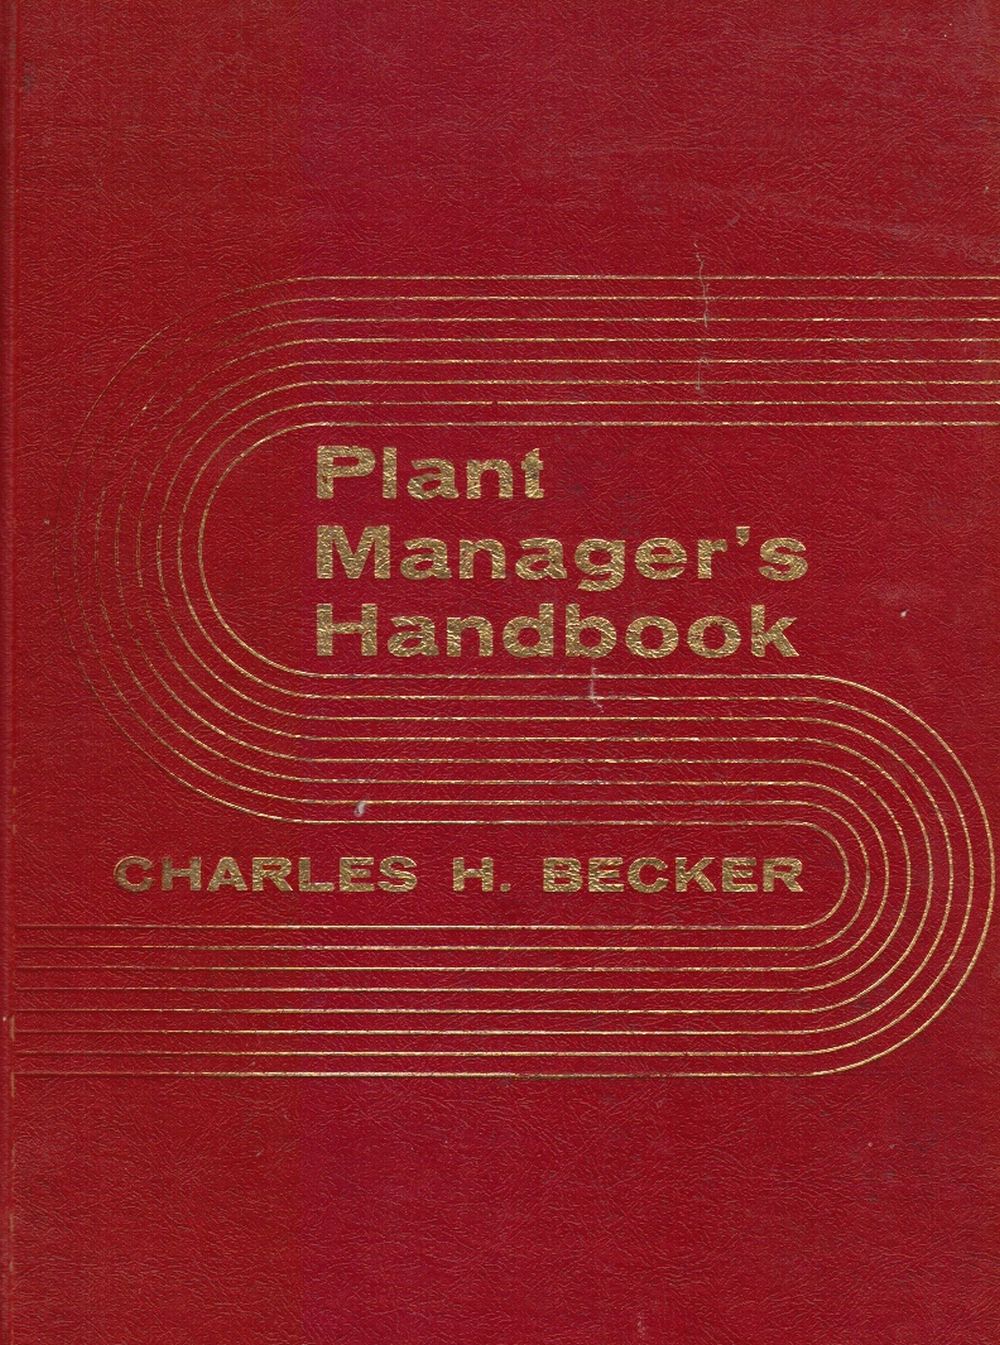 BECKER, CHARLES H. - Plant Manager's Handbook